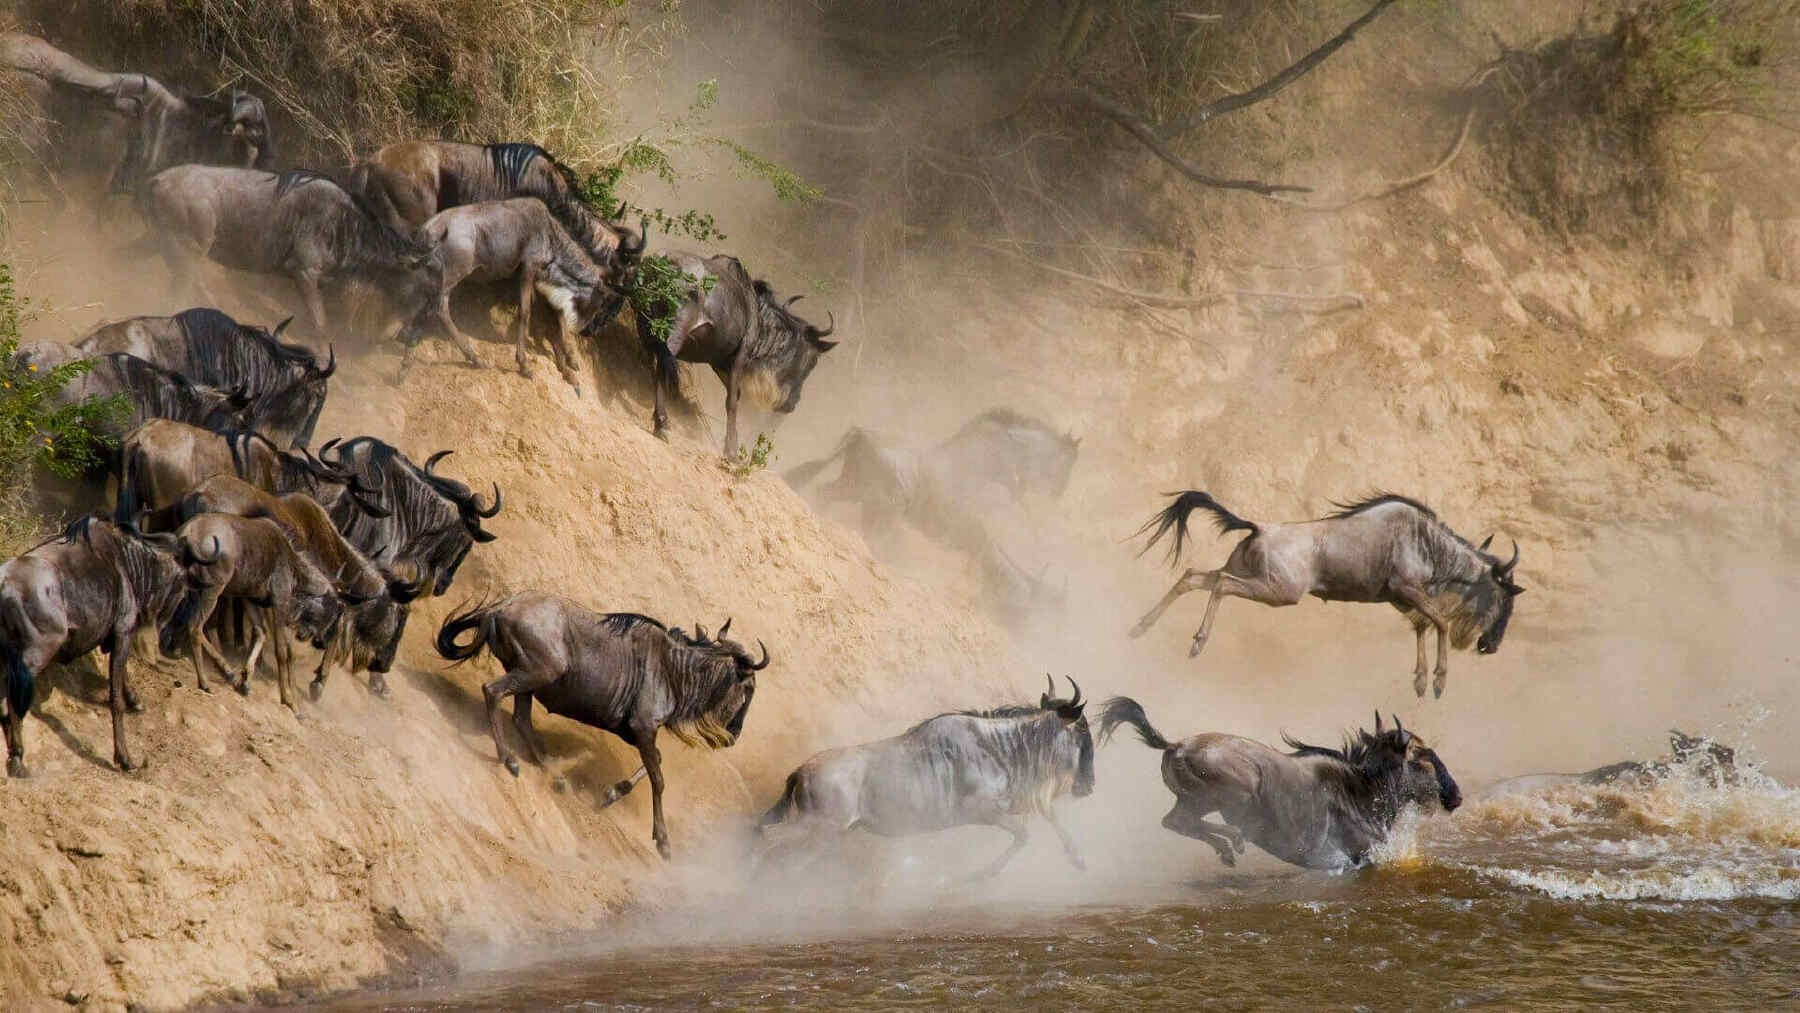 Serengeti great migration